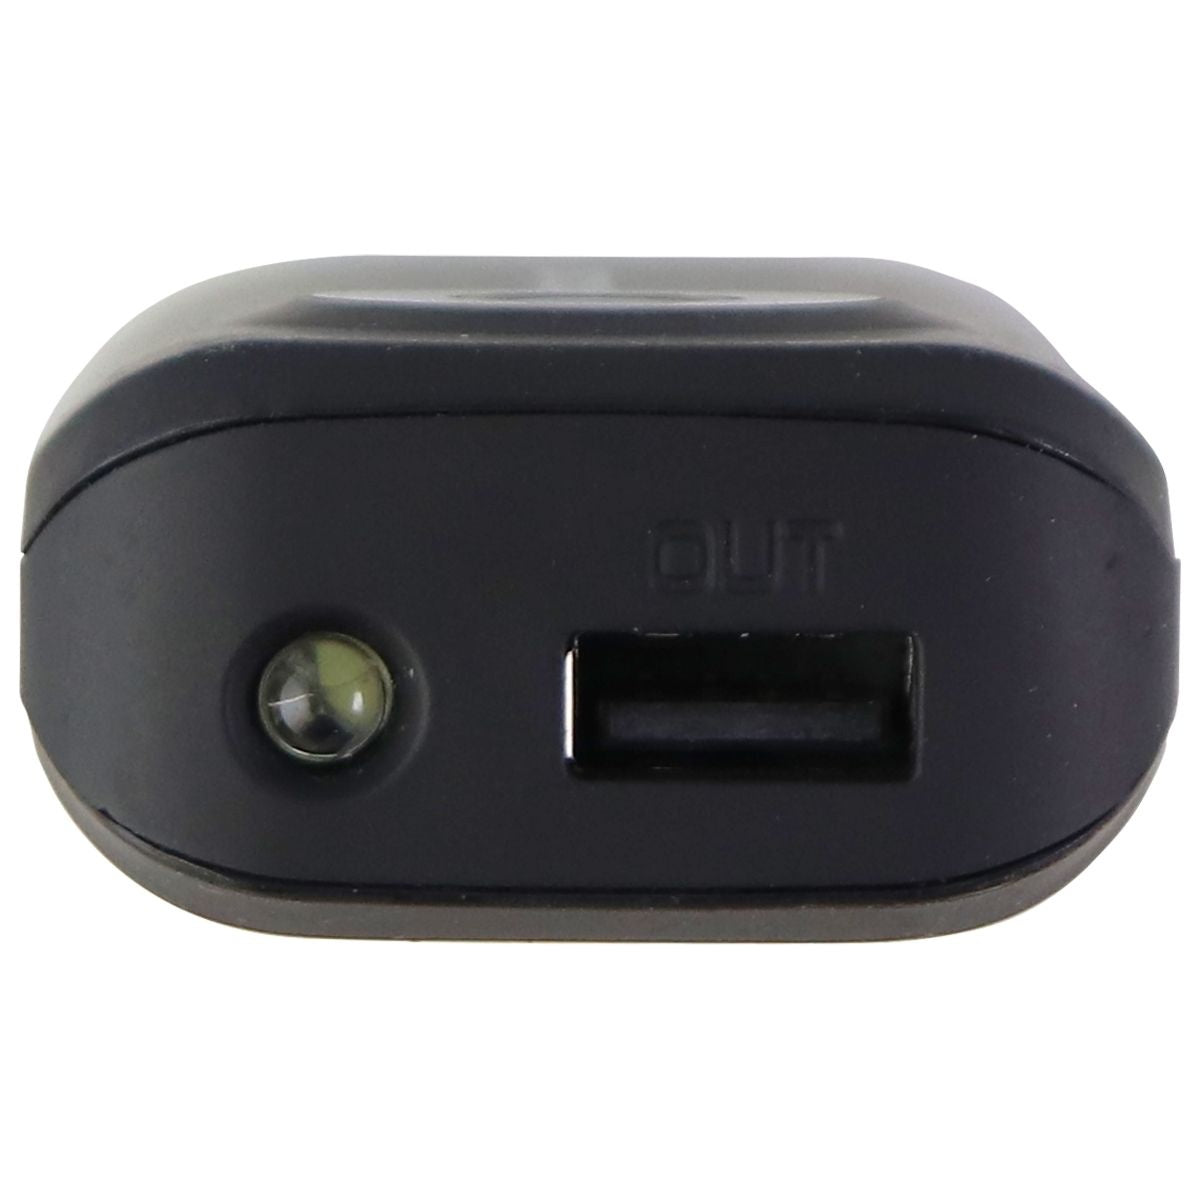 SoundLogic XT (5200mAh) Single USB Portable Charger - Black (MTG-1554) Cell Phone - Chargers & Cradles SoundLogic    - Simple Cell Bulk Wholesale Pricing - USA Seller